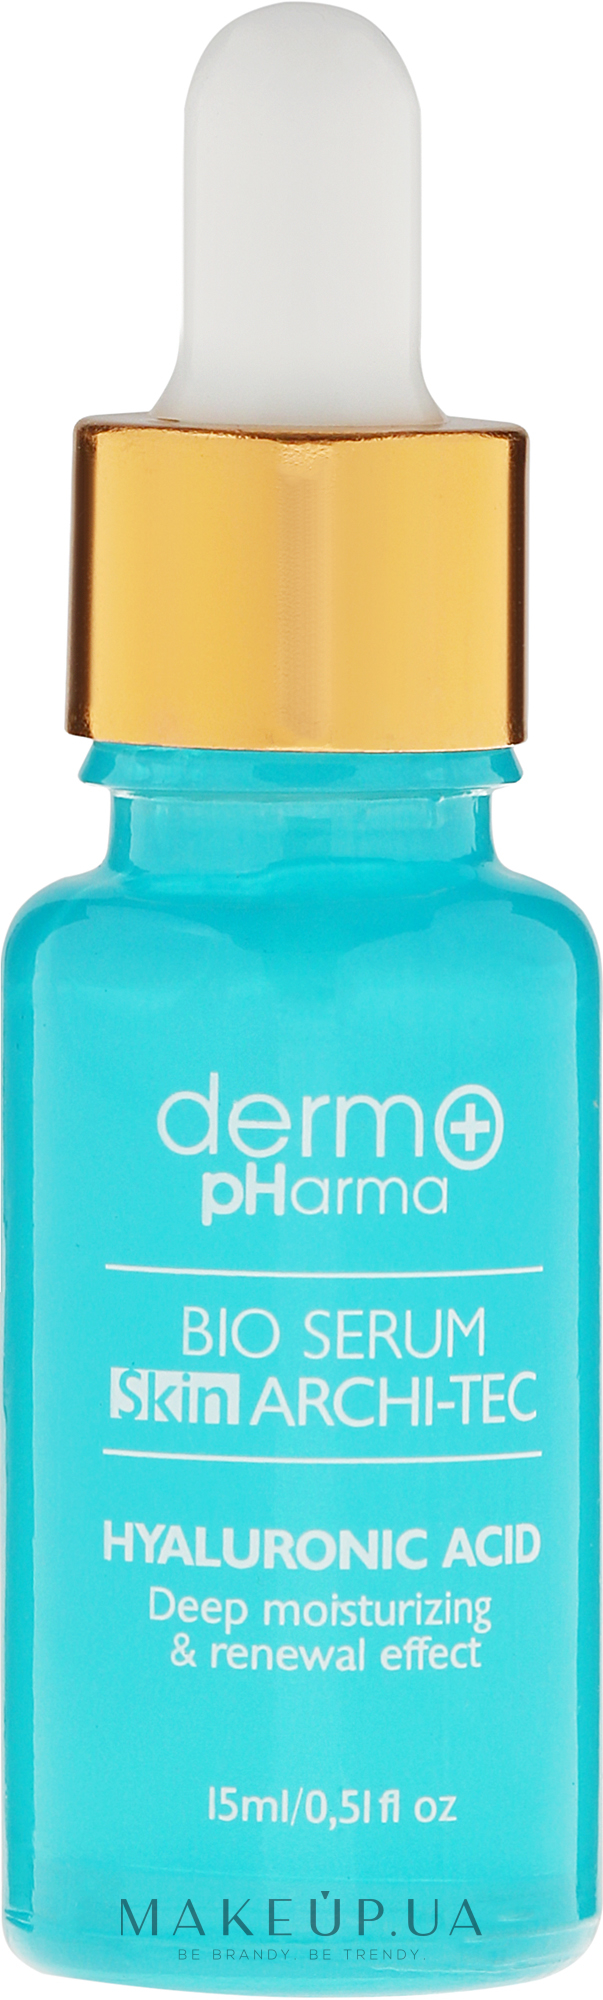 Сыворотка для лица с гиалуроновой кислотой - Dermo Pharma Bio Serum Skin Archi-Tec Hyaluronic Acid — фото 15ml